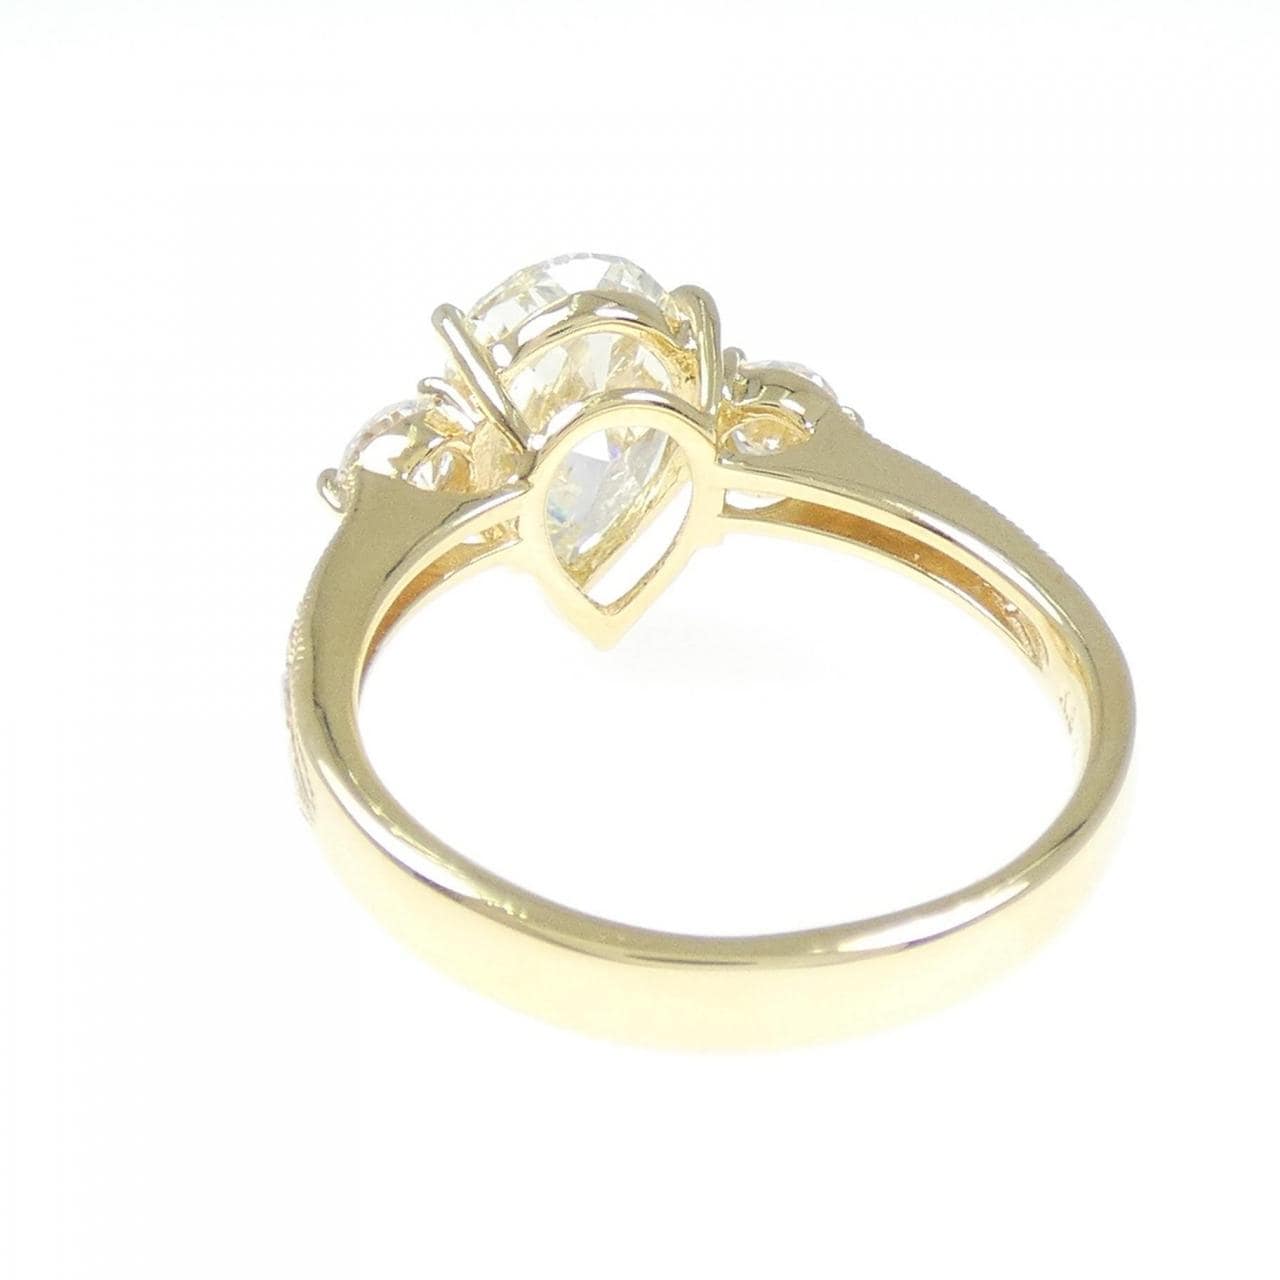 [Remake] K18YG Diamond Ring 2.074CT VLY SI1 Pear Shape